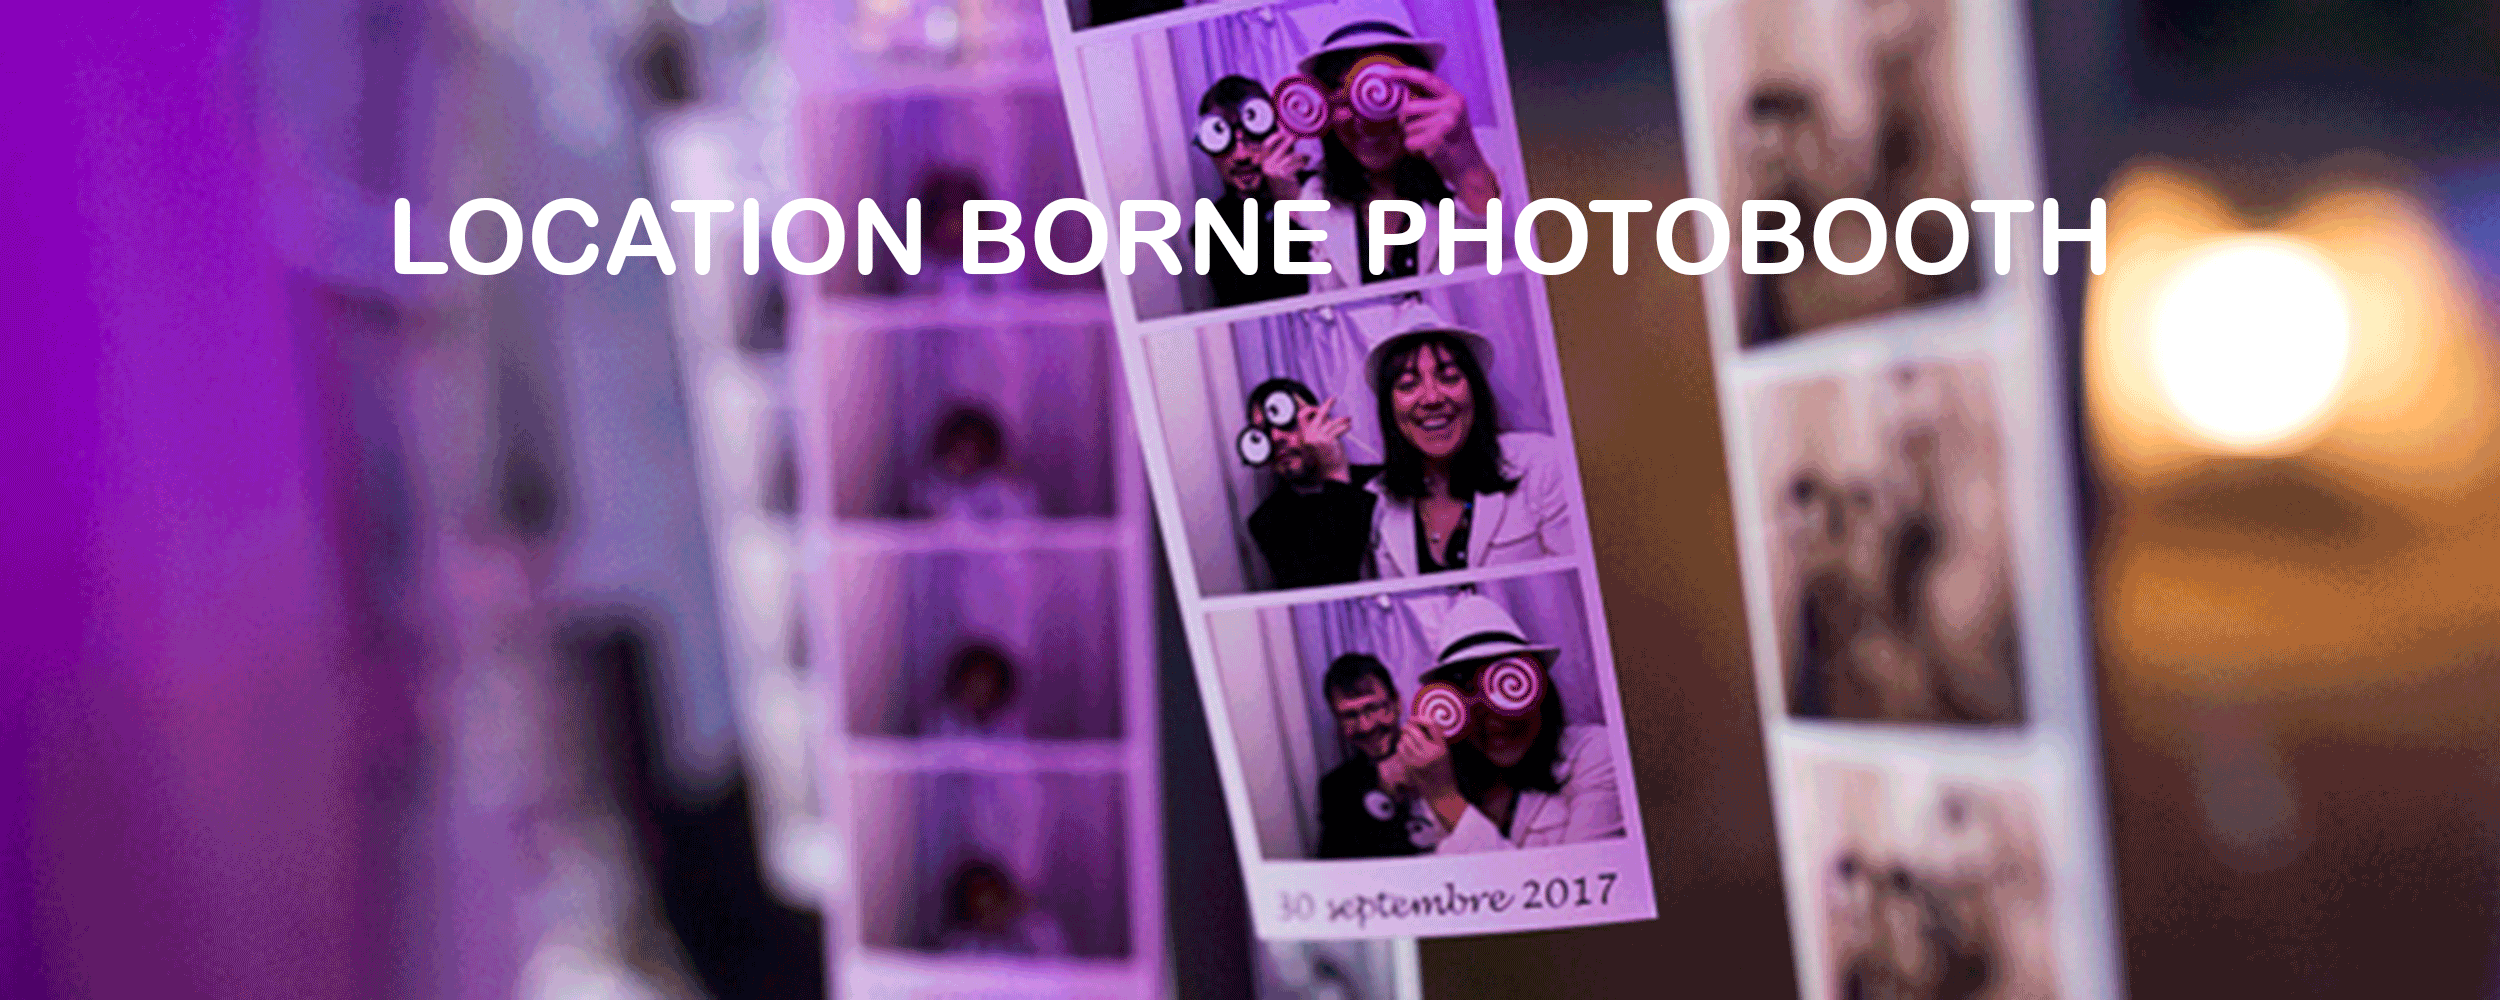 location-photobooth-pau-borne-selfie-photo-bordeaux-tarbes